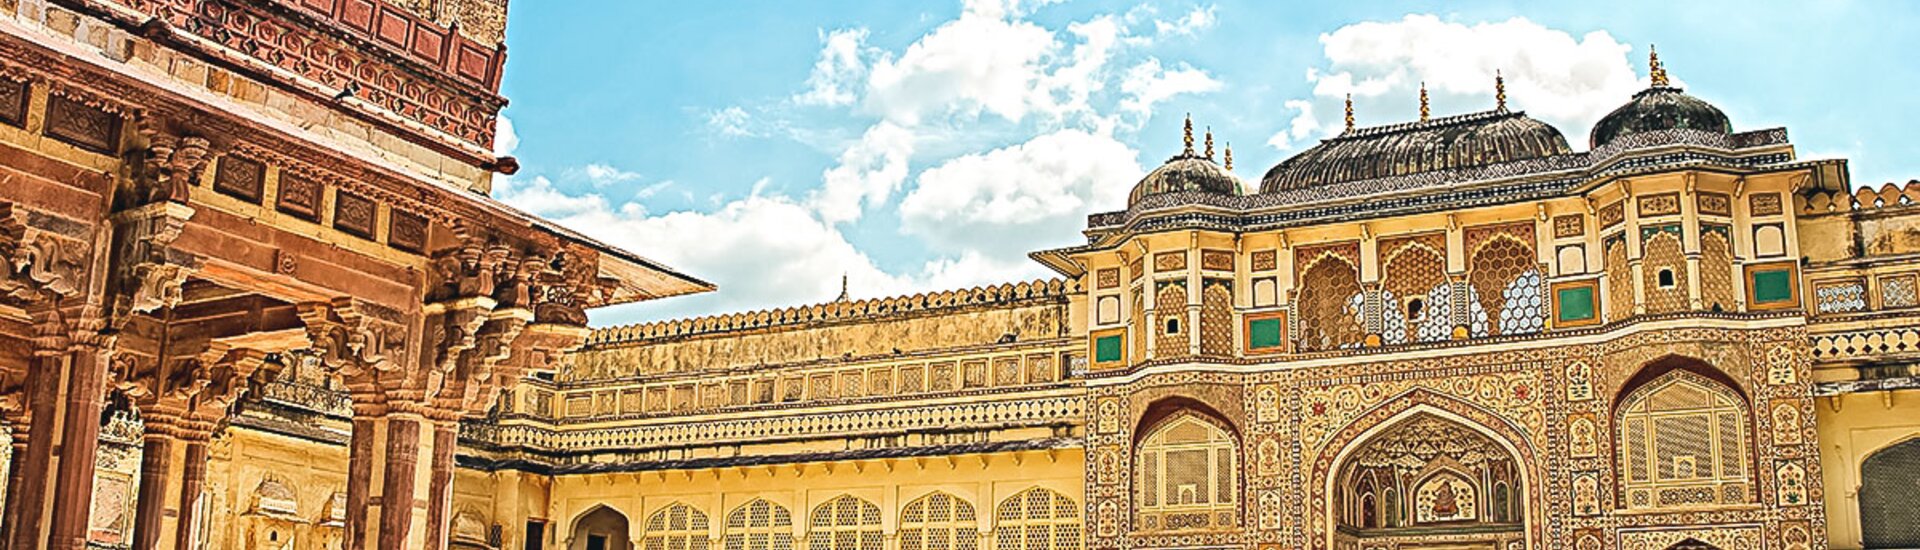 Das Innere des Amber Forts in Jaipur